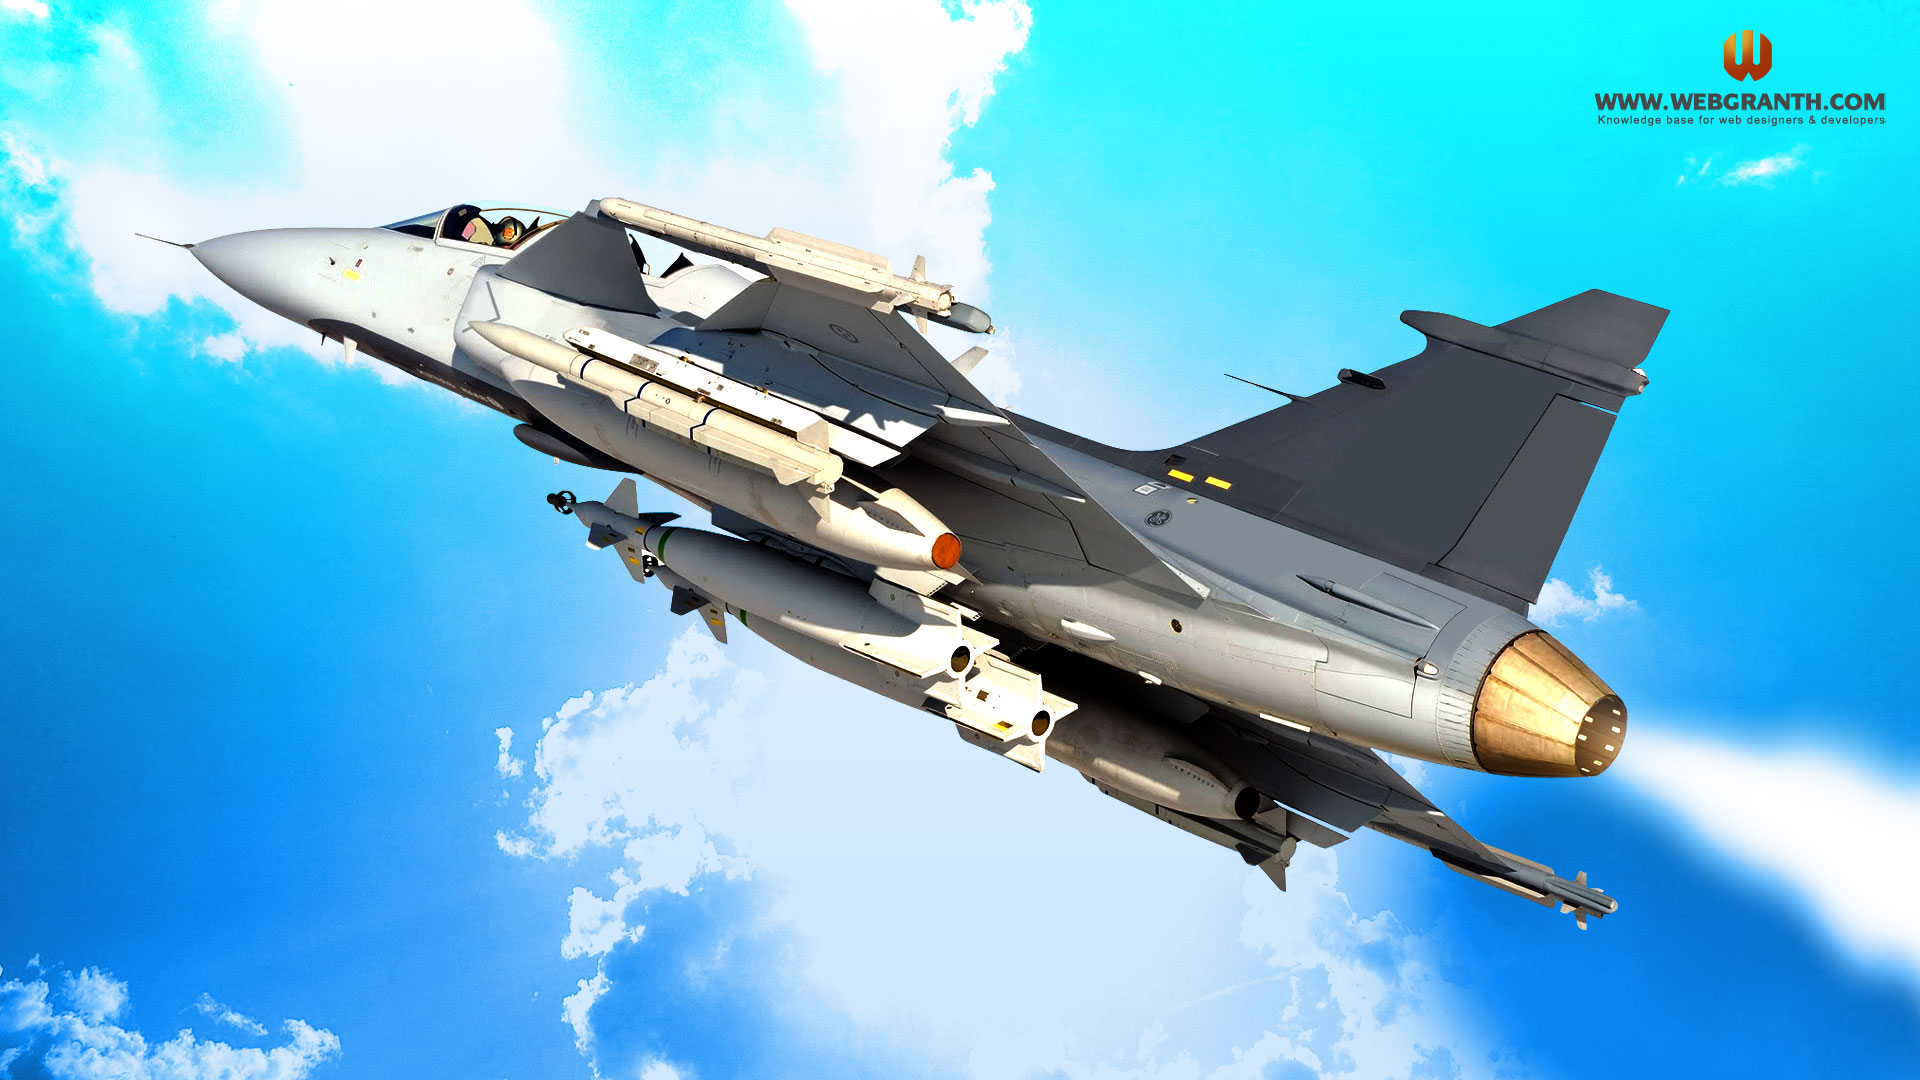 Fighter Jet HD Desktop Wallpaper   Webgranth 2015